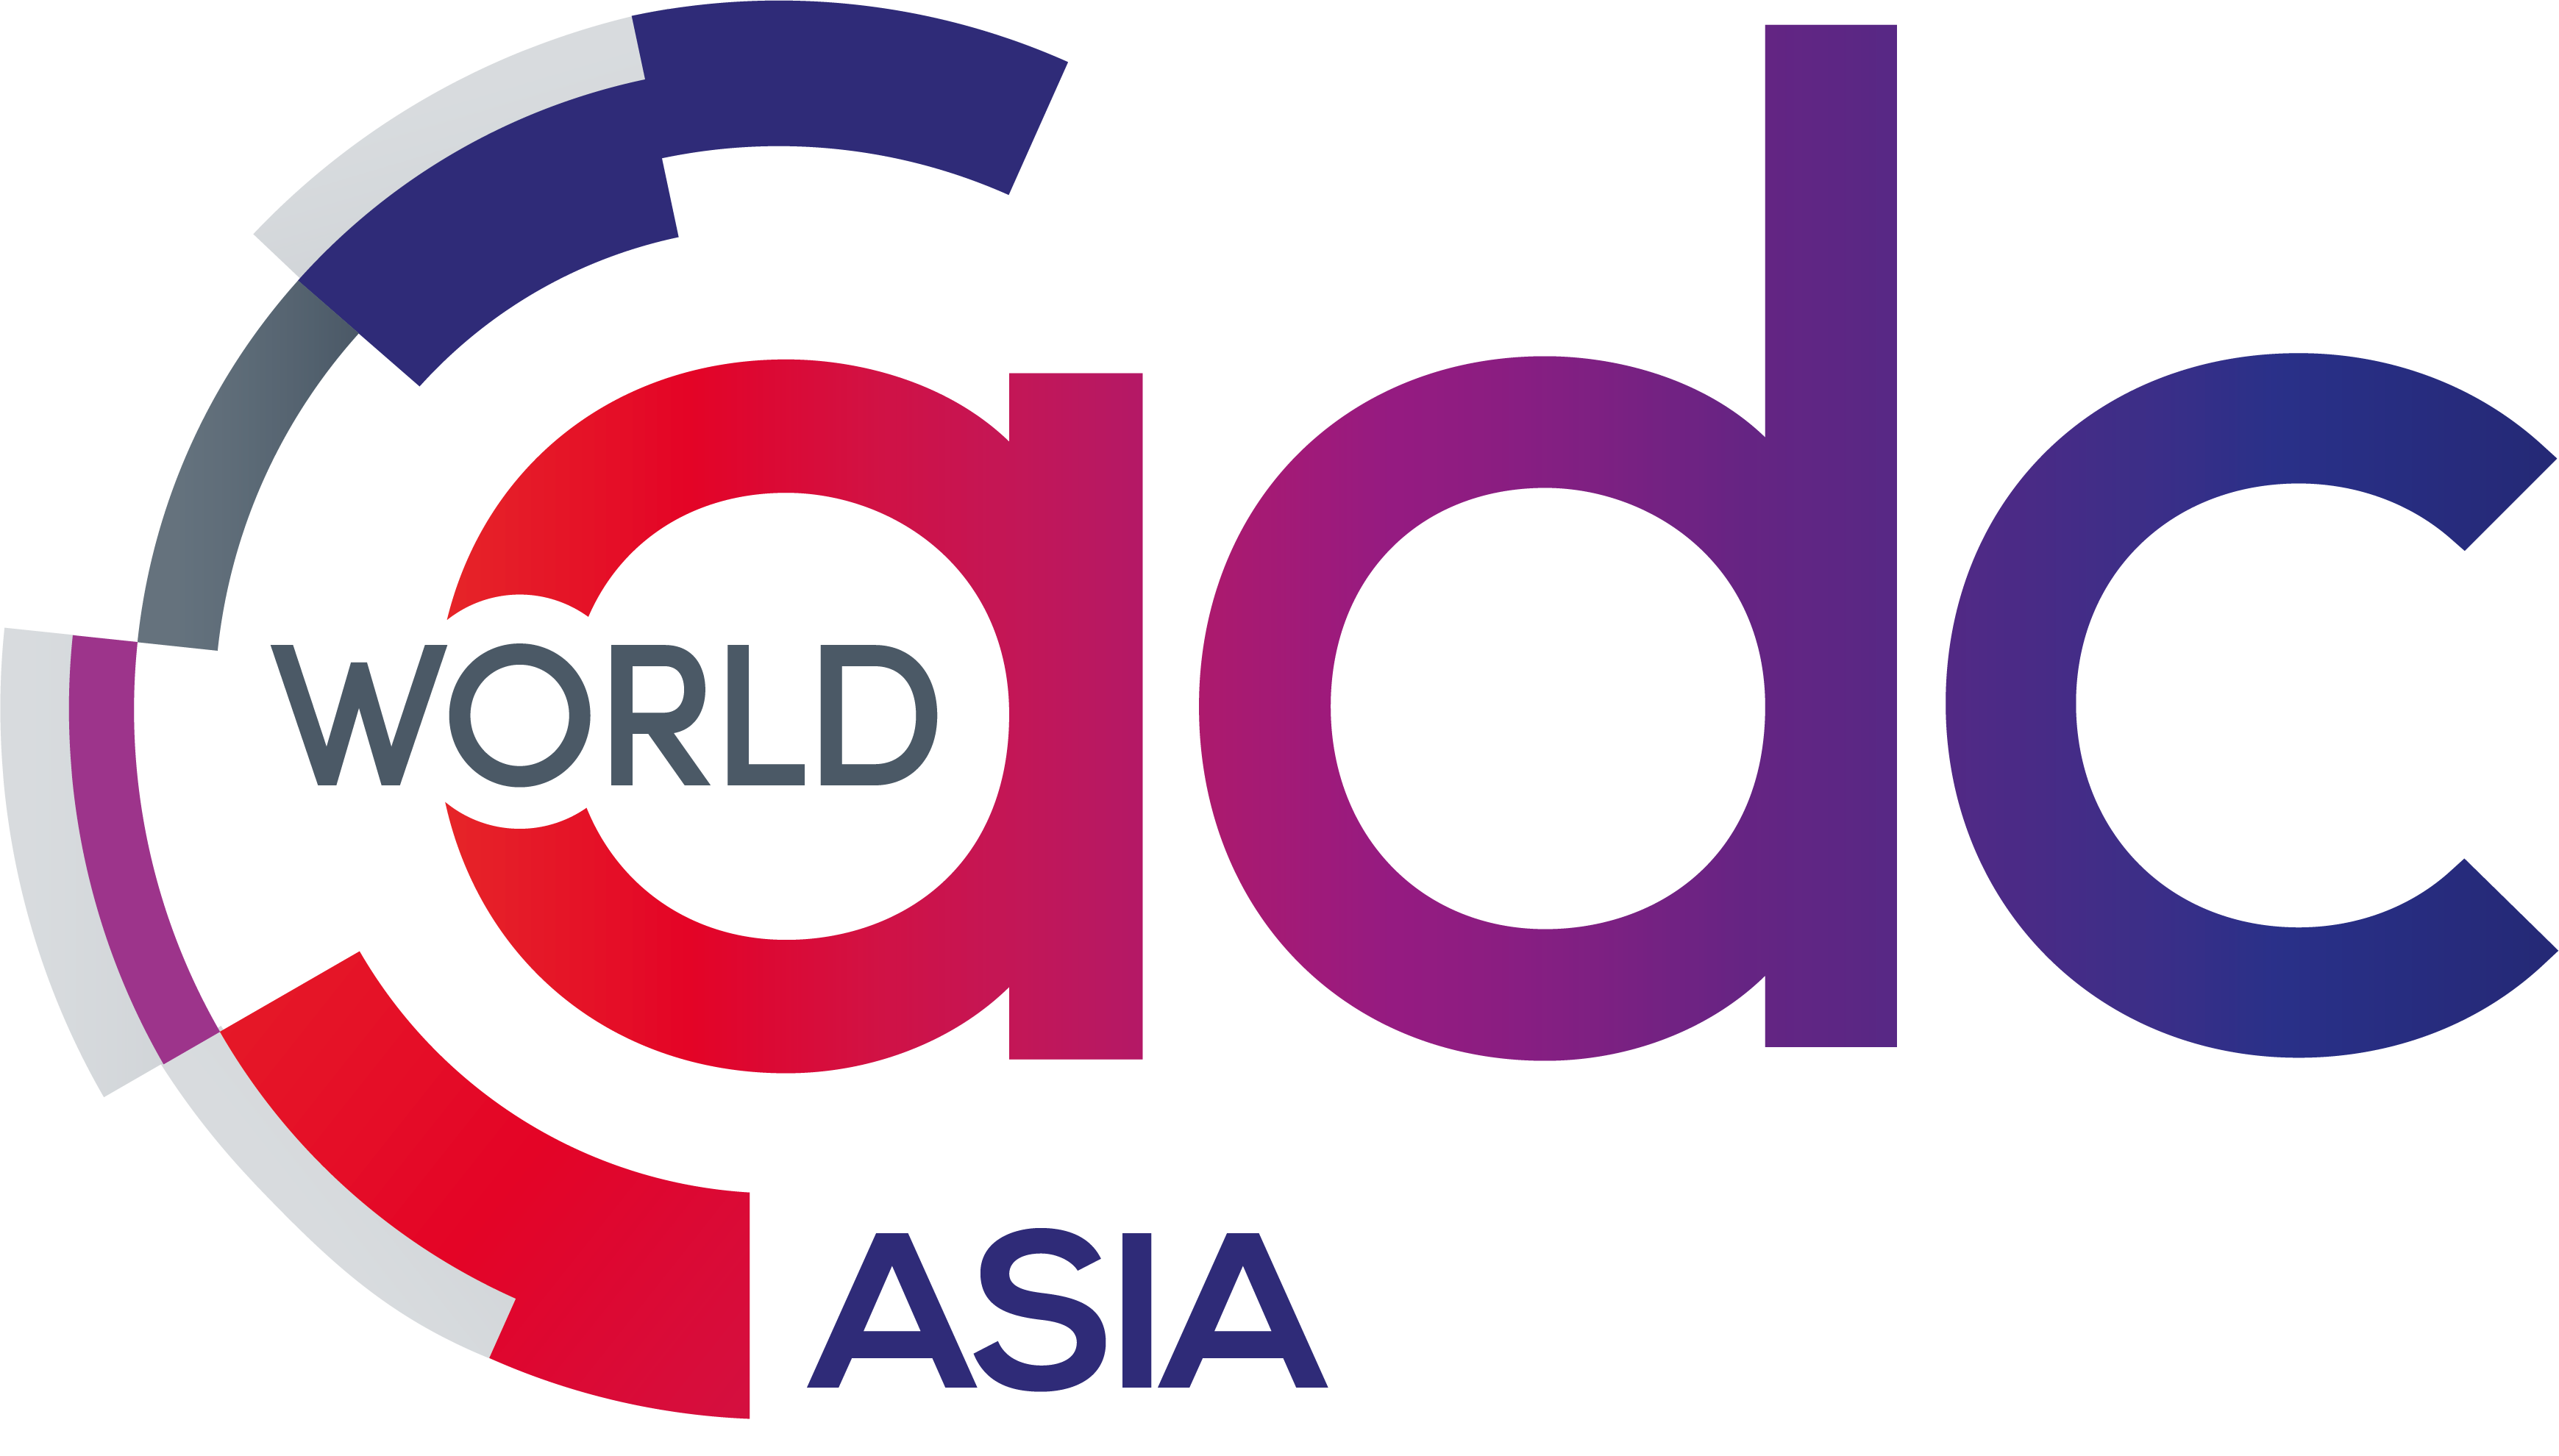 HW231002 World ADC Asia NO DATE logo (1)